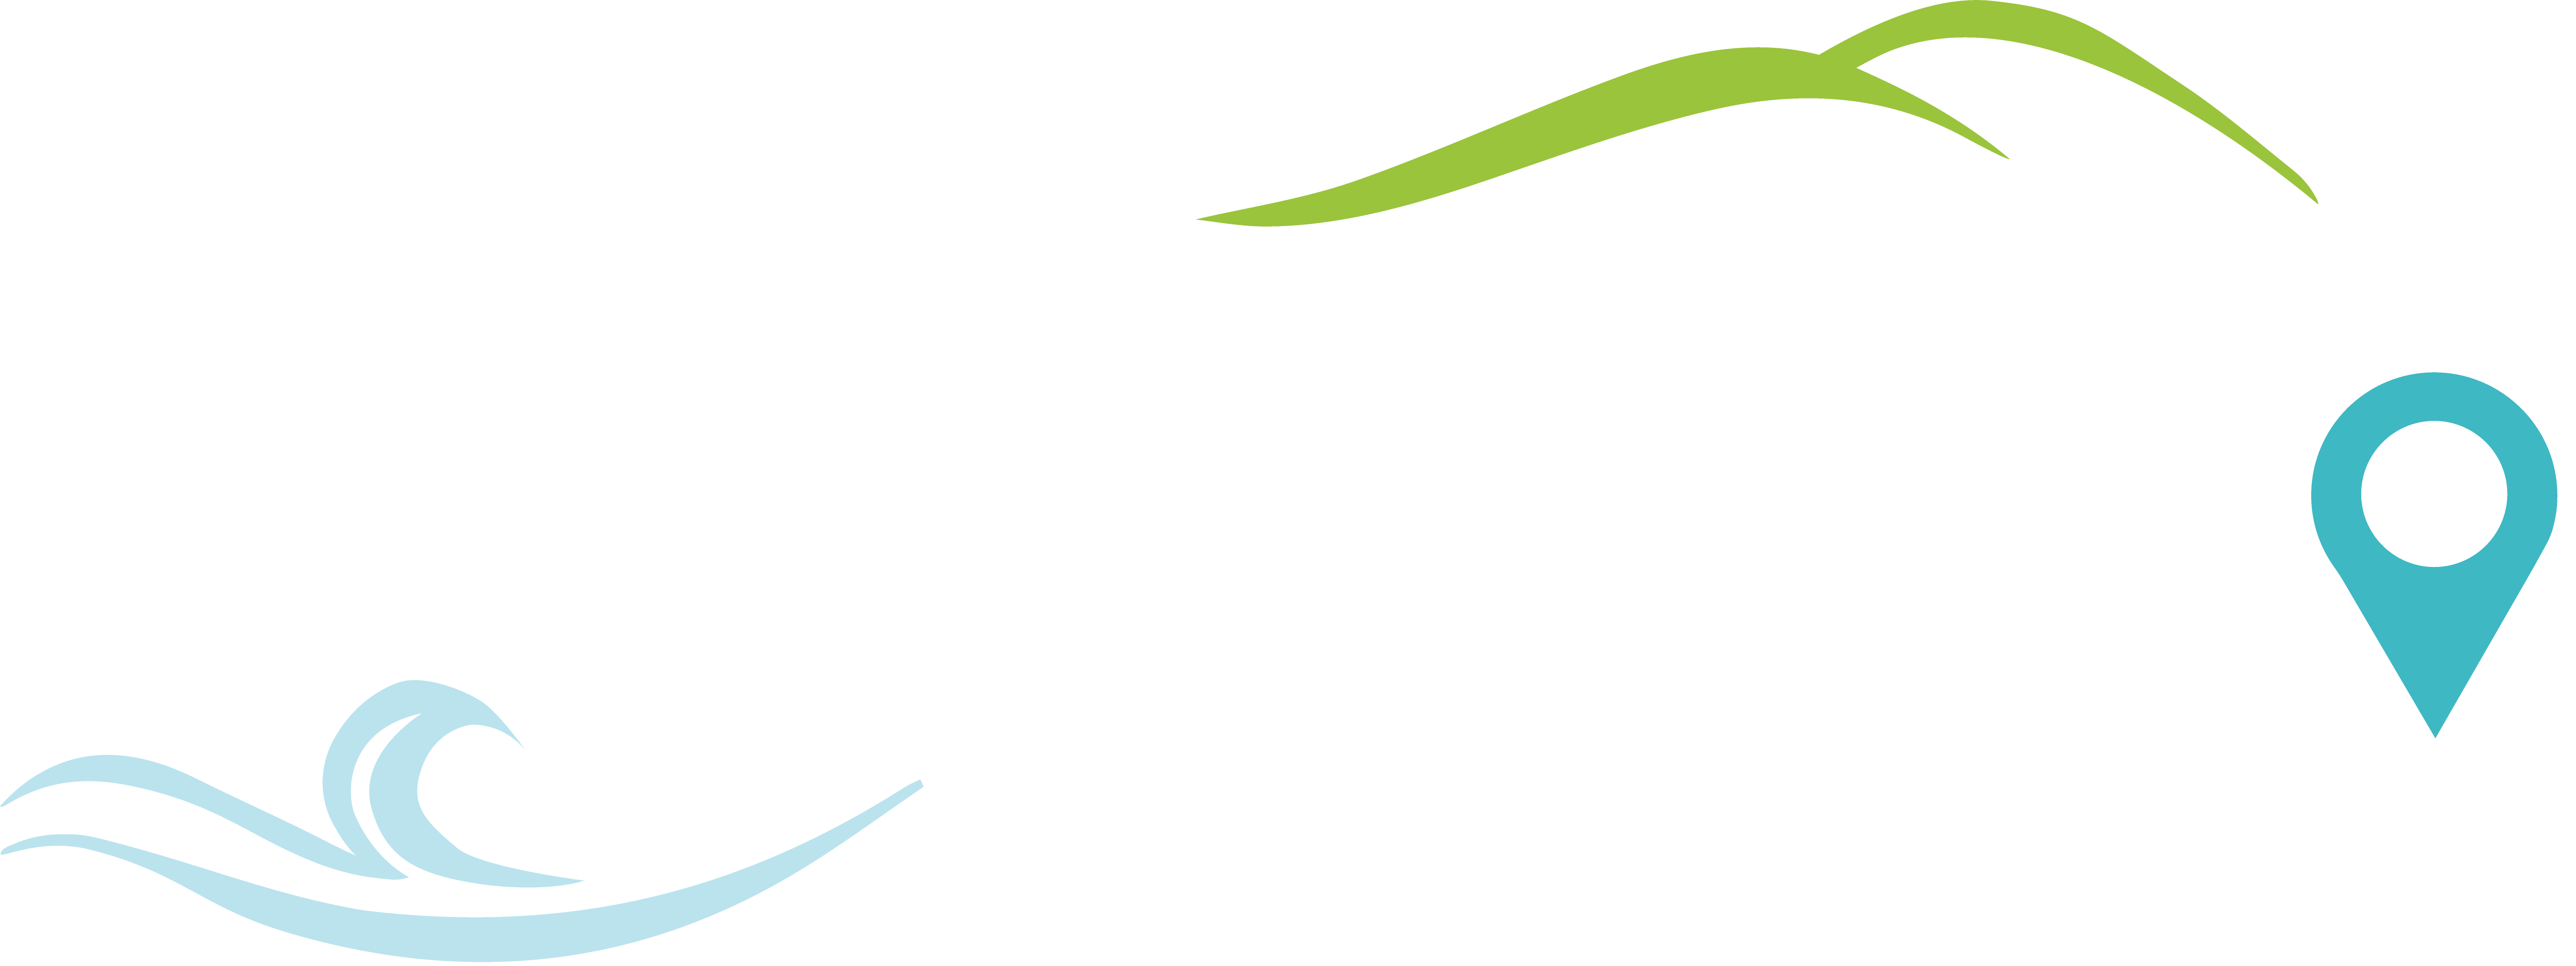 Discover Richmond Valley